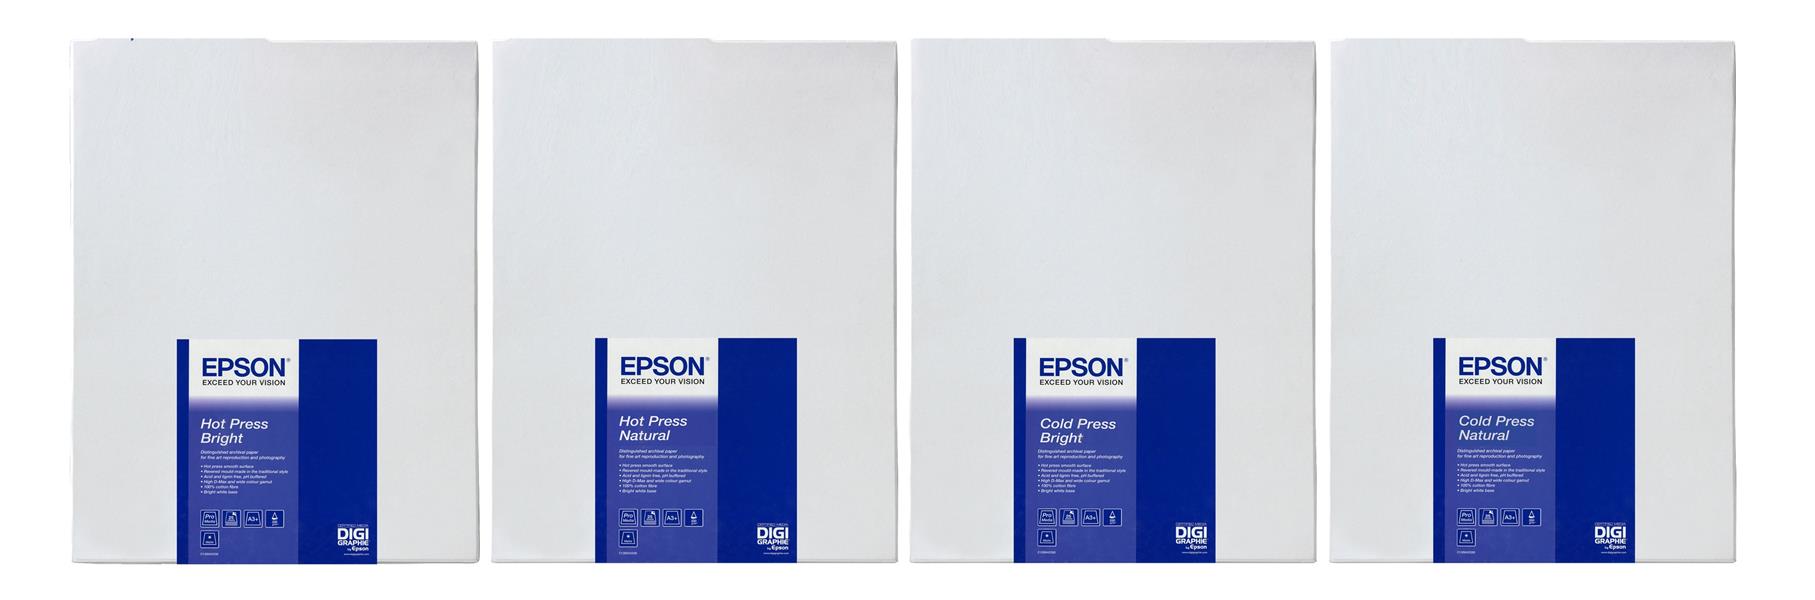 Epson Cold Press Natural 24""x 15m